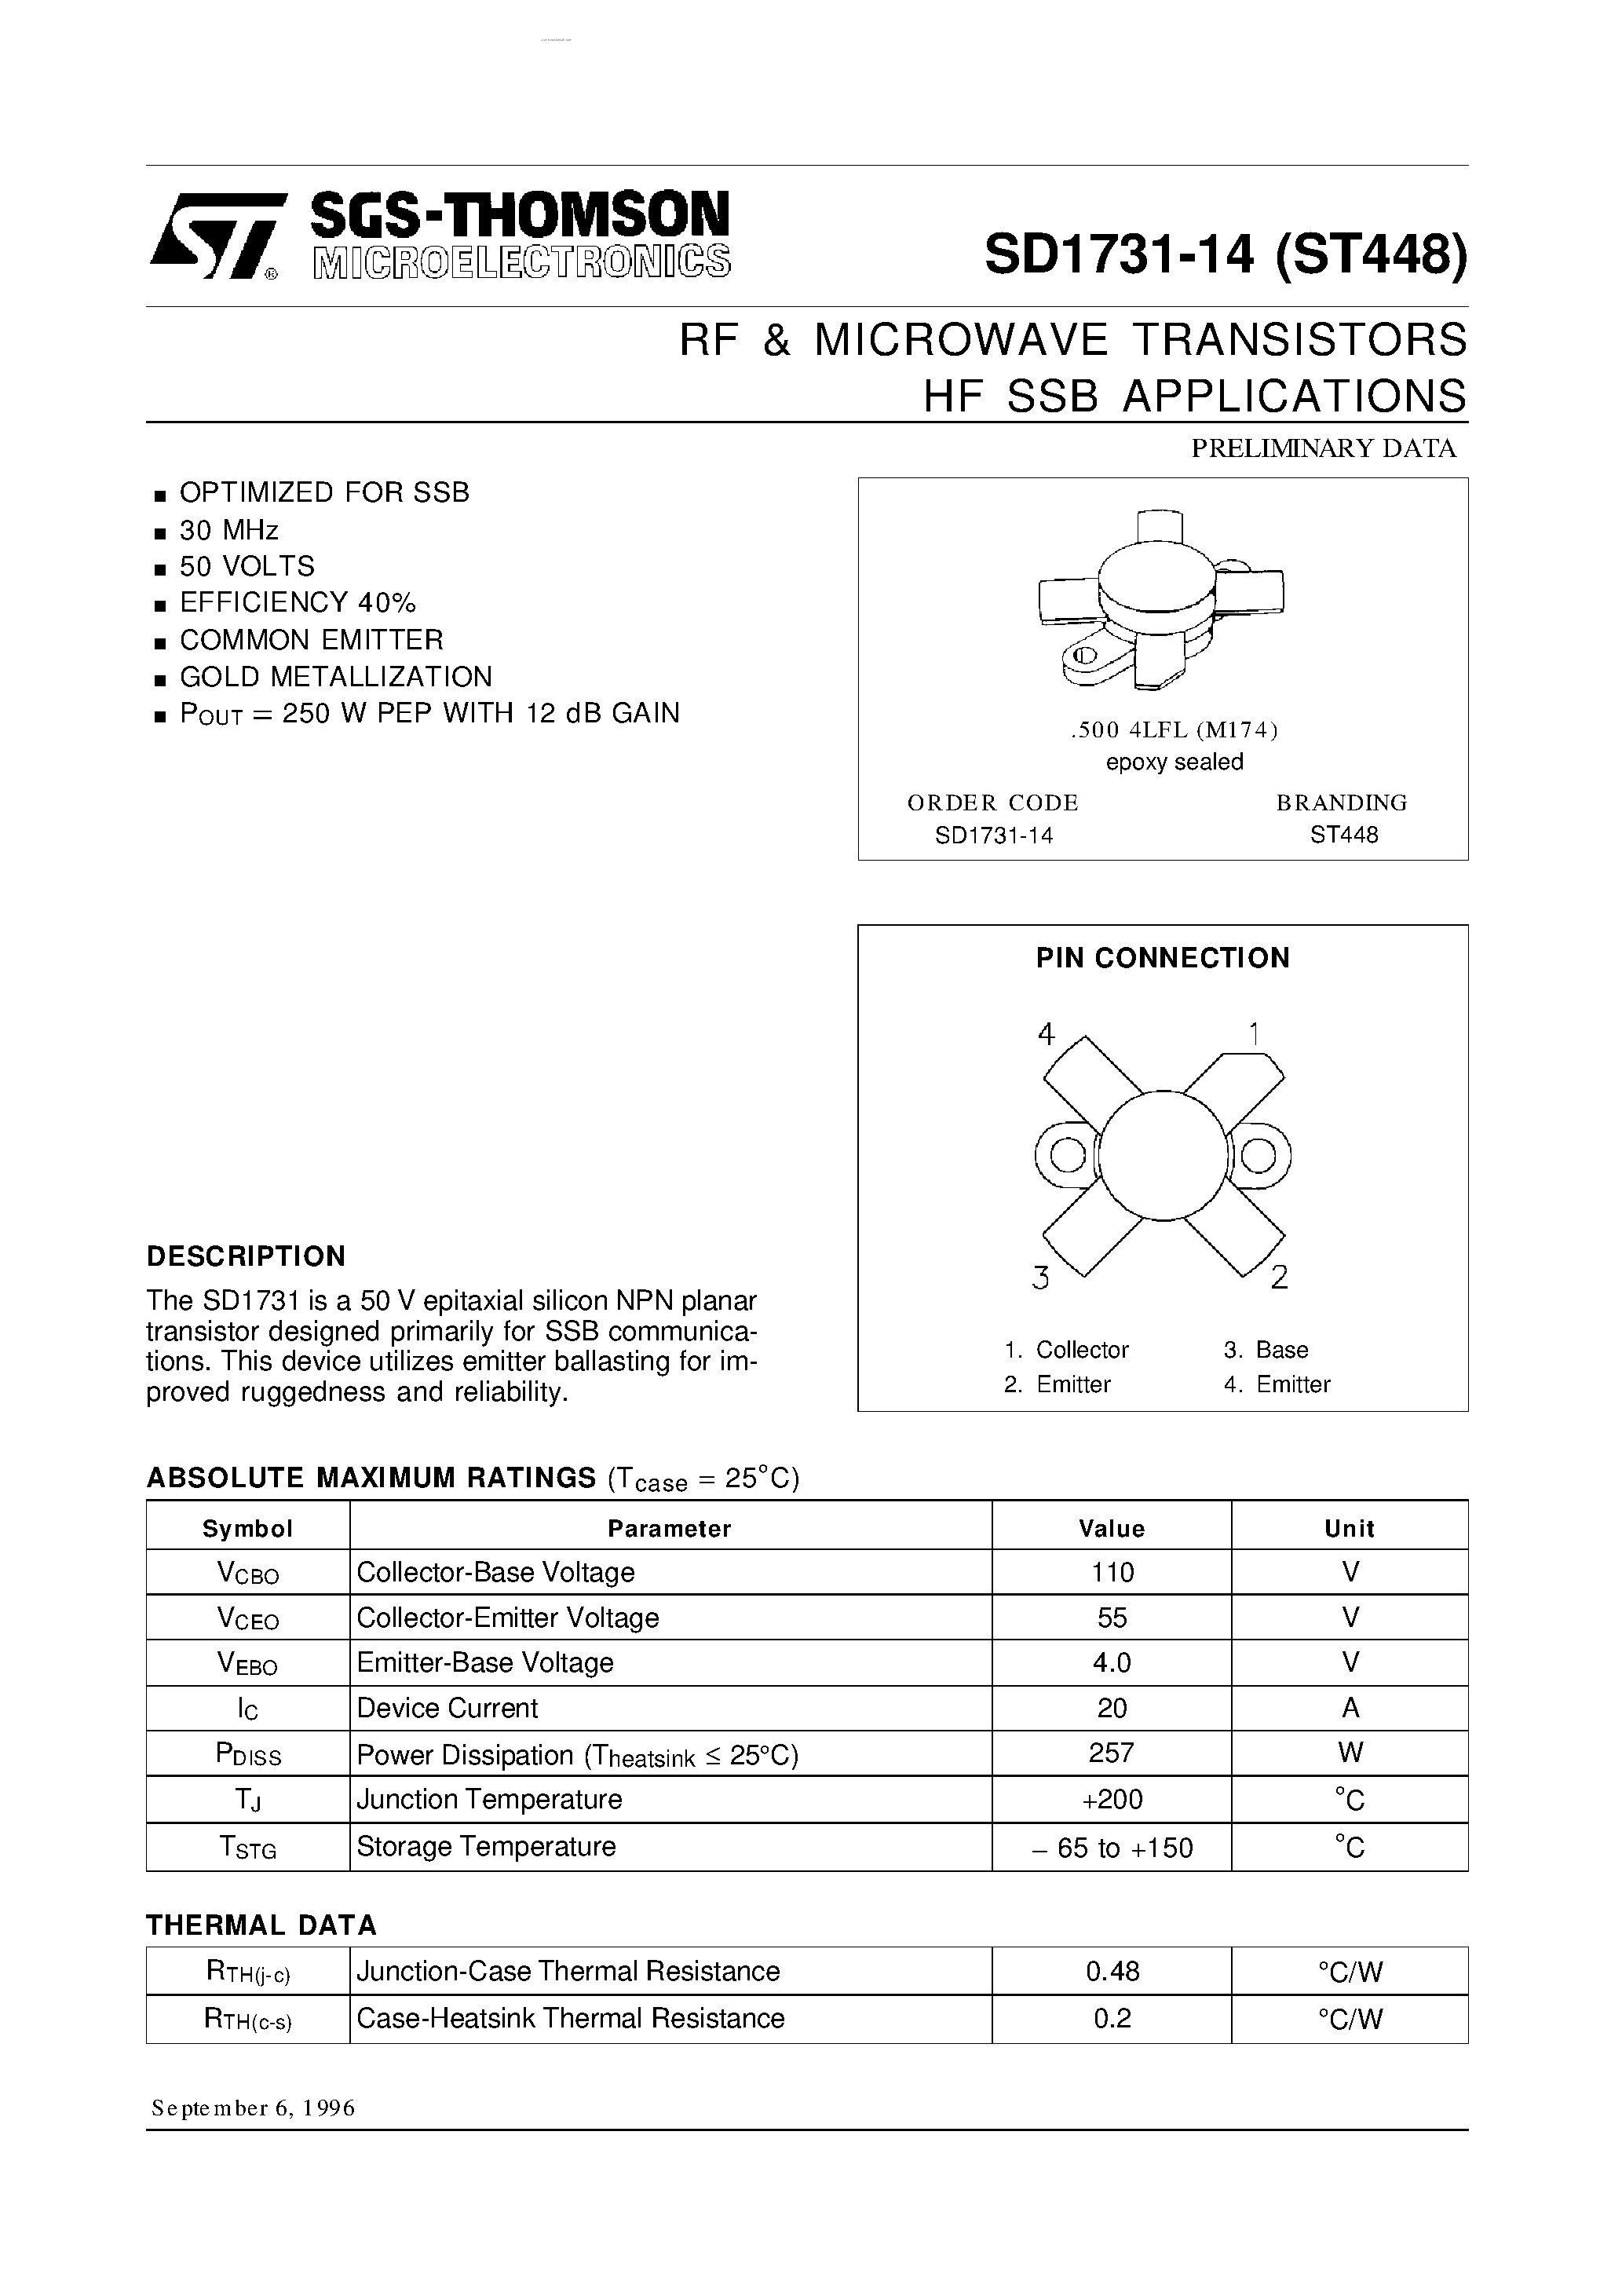 Datasheet ST448 - RF & MICROWAVE TRANSISTORS HF SSB APPLICATIONS page 1